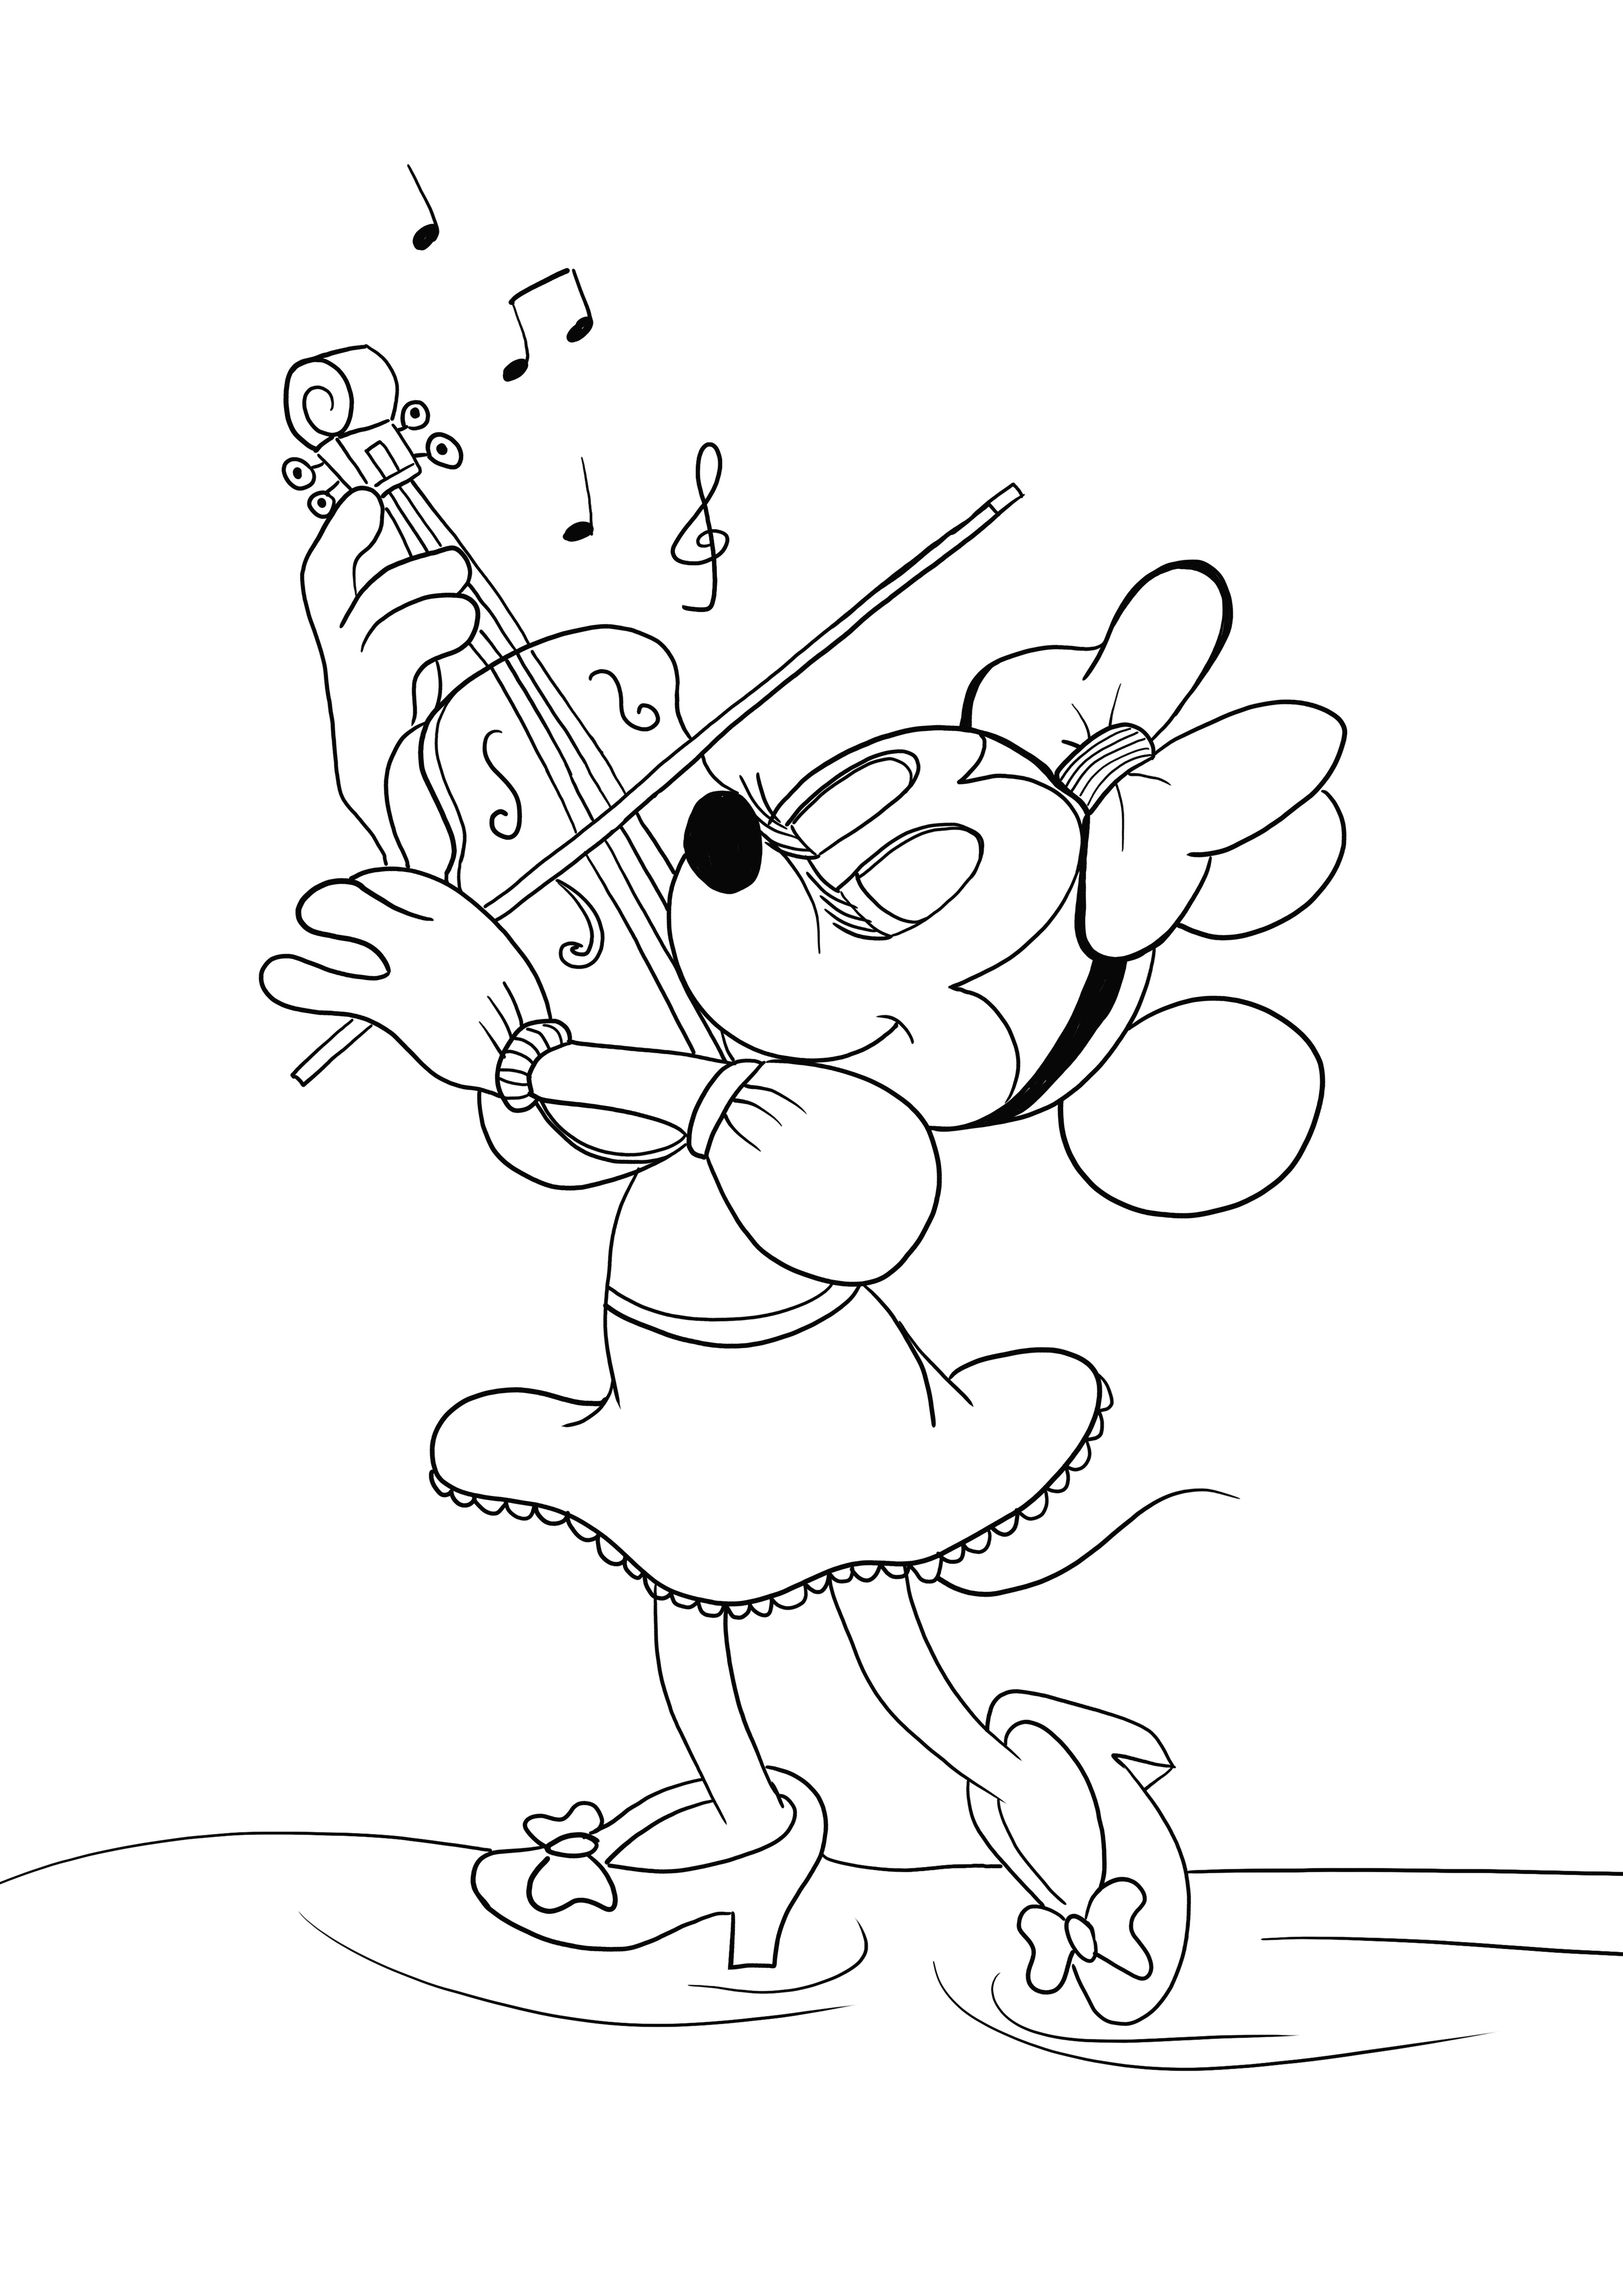 Minnie speelt viool om te downloaden en gratis te printen kleurplaat